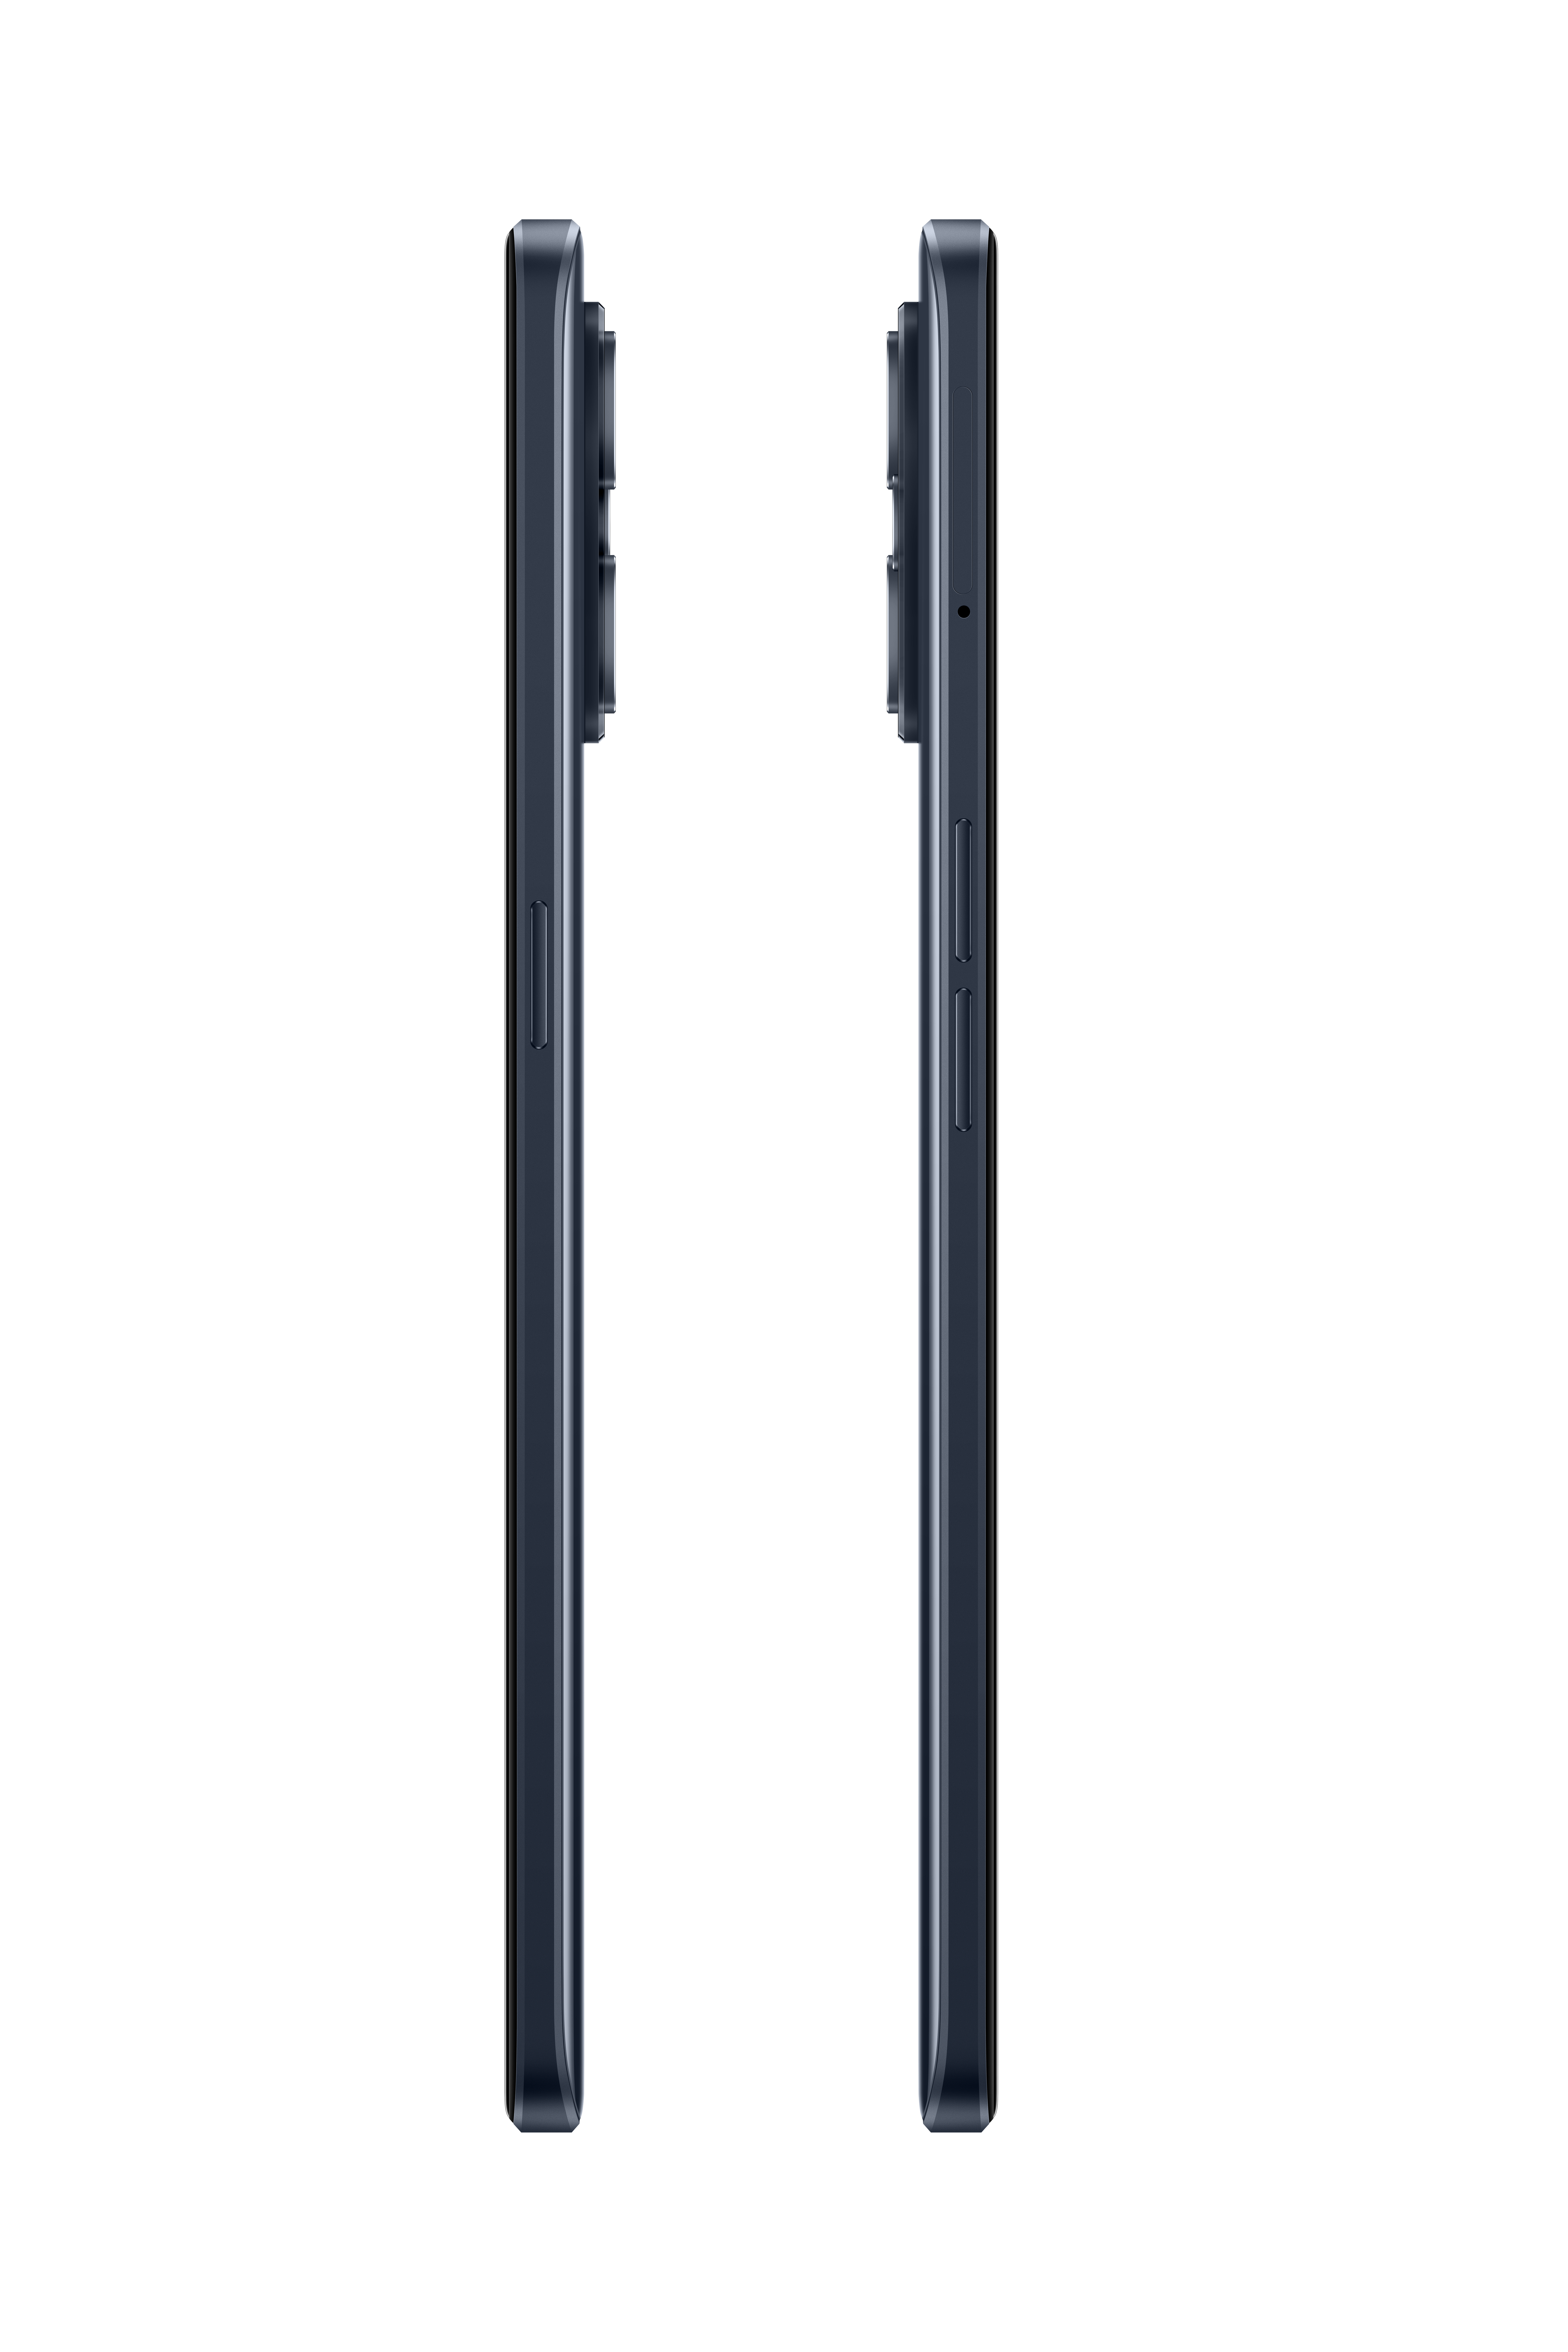 Realme 9 Pro+ 5G Dual-SIM 128GB Midnight black Android 12 Smartphone